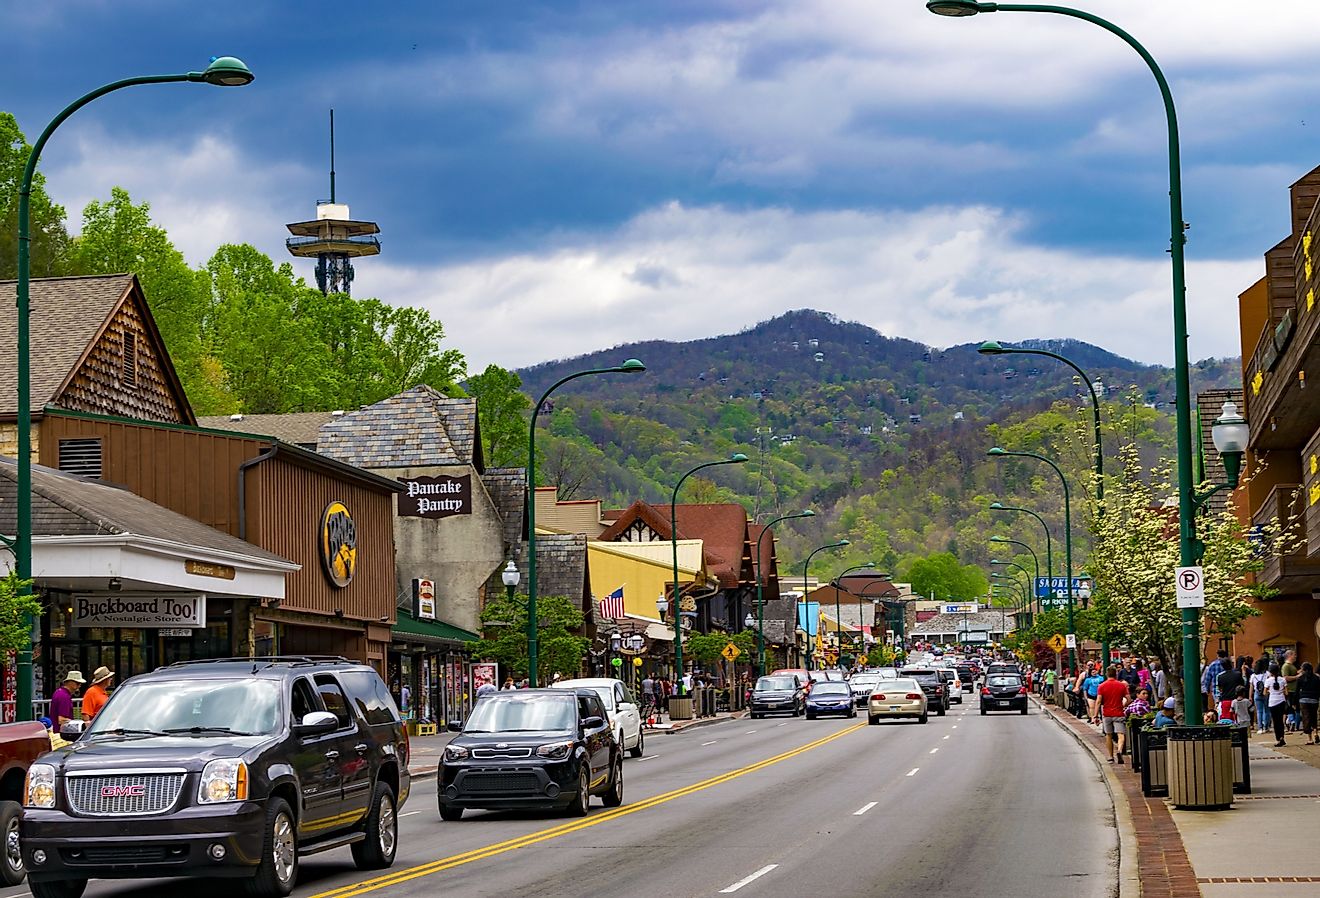 Main street in Gatlinburg, Tennessee. Image credit David S Swierczek via Shutterstock